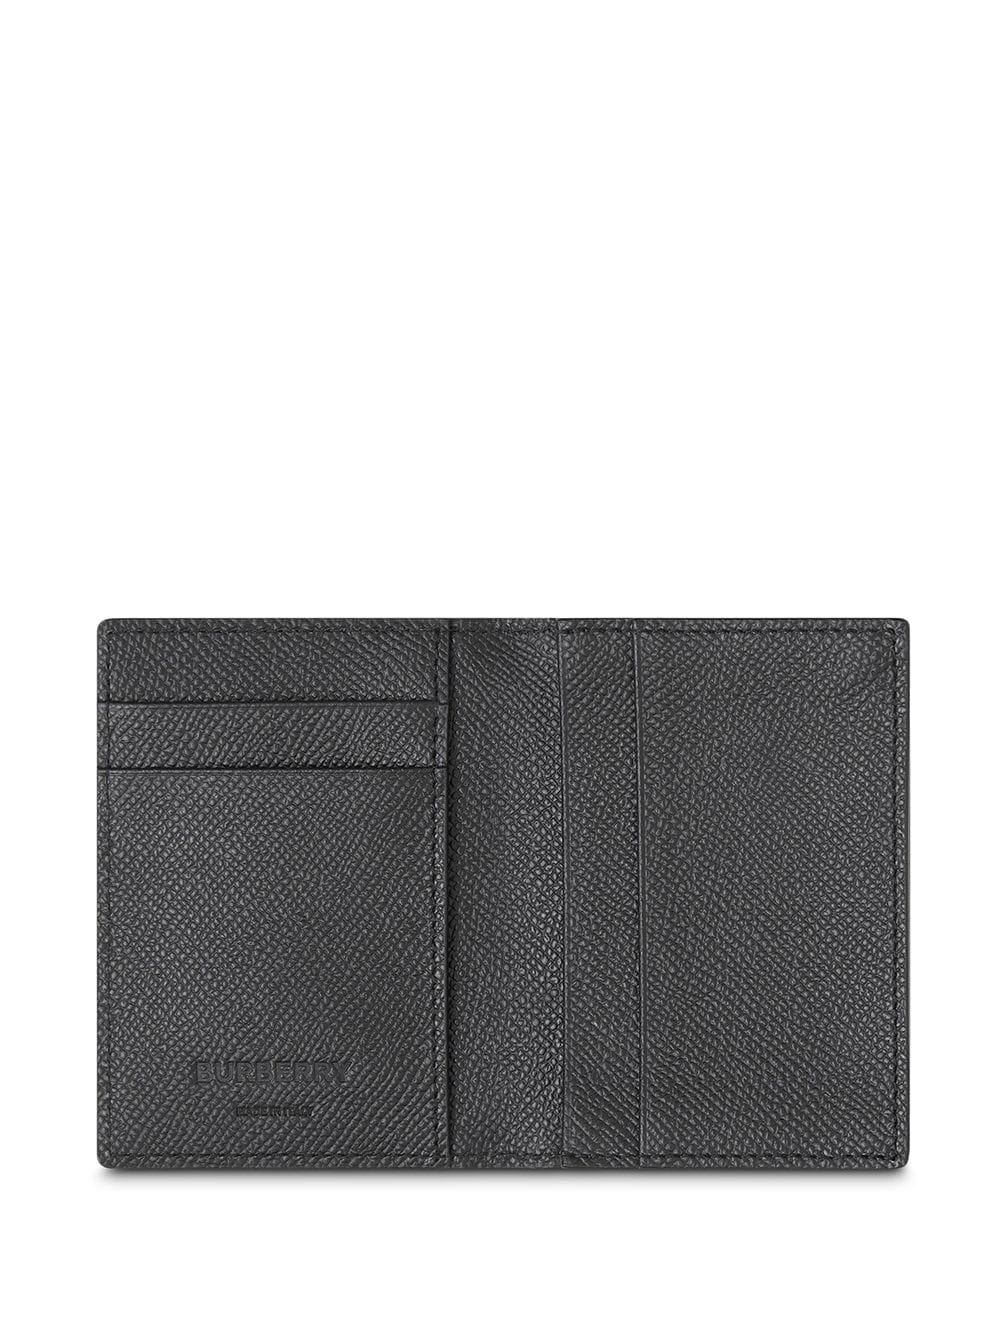 Burberry Grainy Leather Folding Card Case - Farfetch